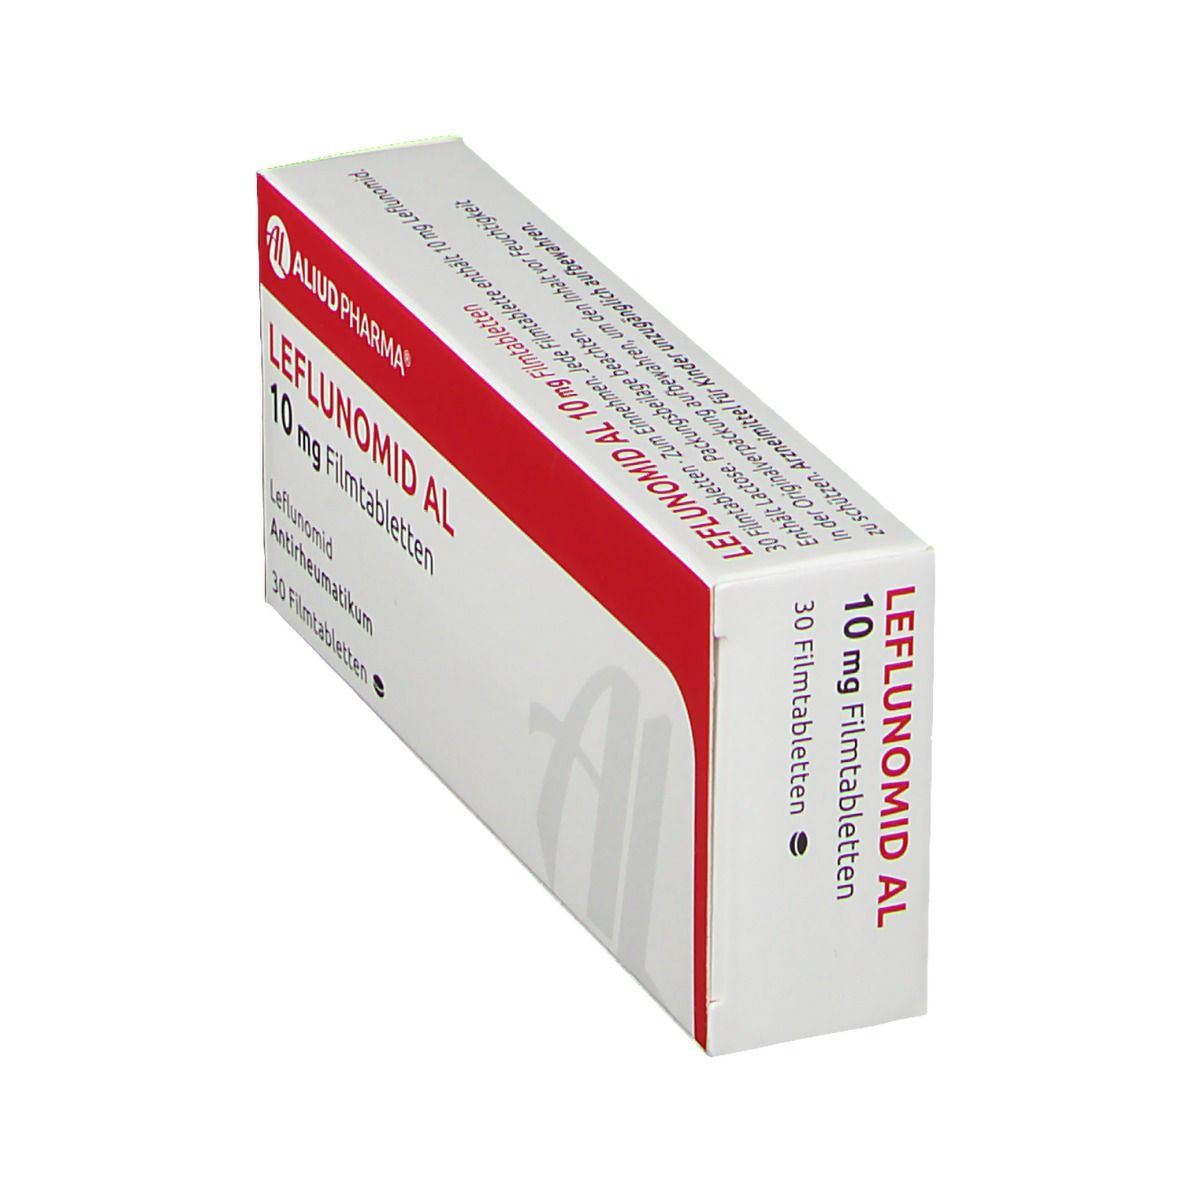 Leflunomid AL 10 mg